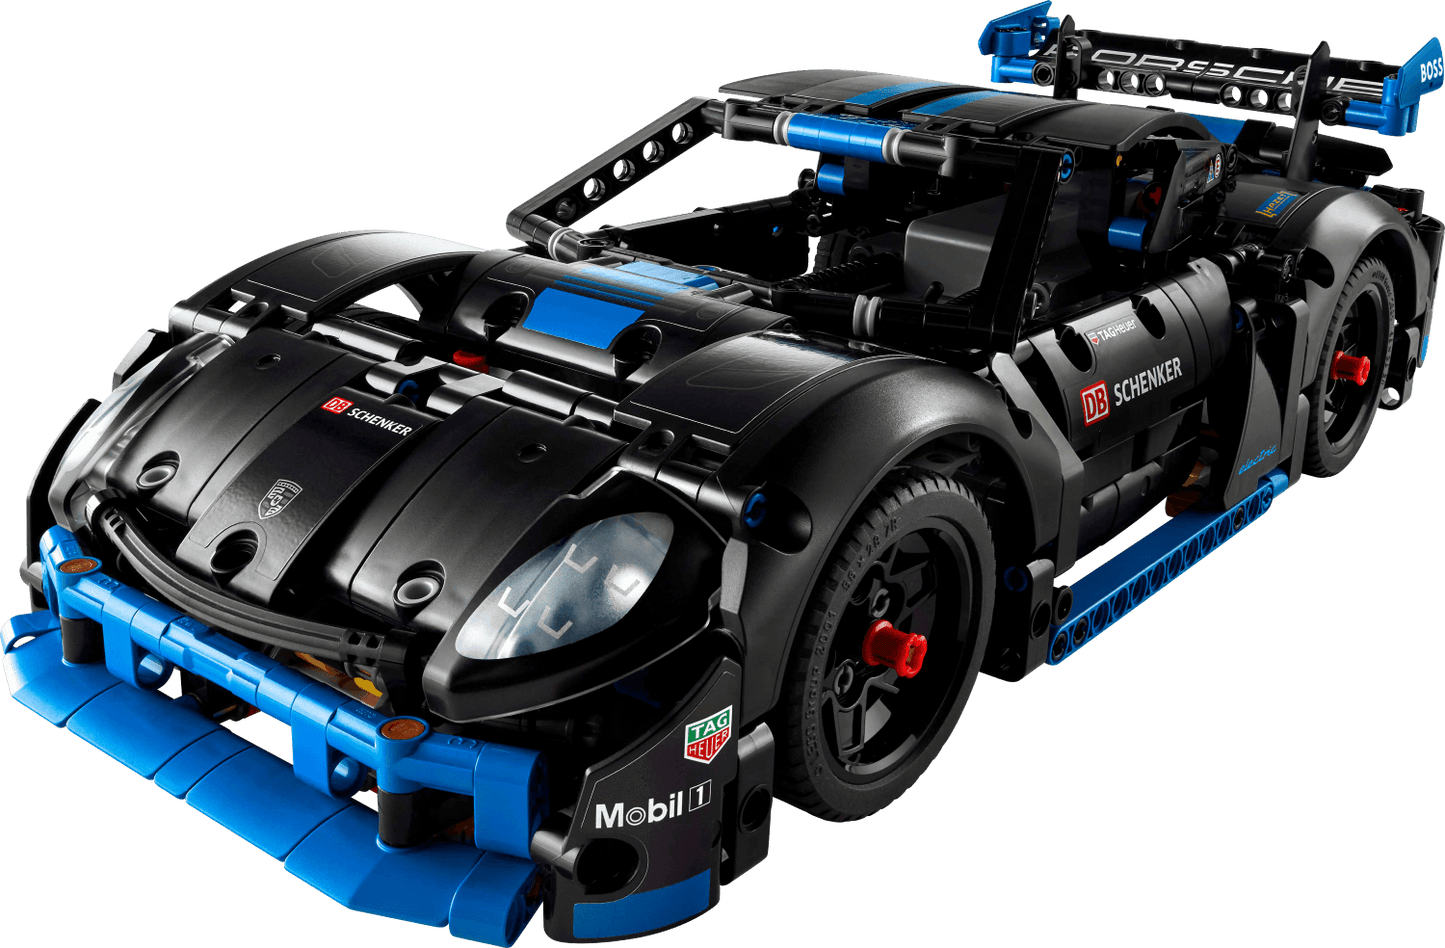 LEGO Porsche GT4 e-Performance racewagen 42176 Technic (Pre-Order: verwacht augustus) LEGO TECHNIC @ 2TTOYS LEGO €. 149.99